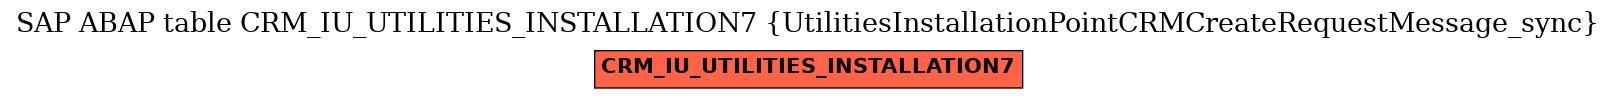 E-R Diagram for table CRM_IU_UTILITIES_INSTALLATION7 (UtilitiesInstallationPointCRMCreateRequestMessage_sync)